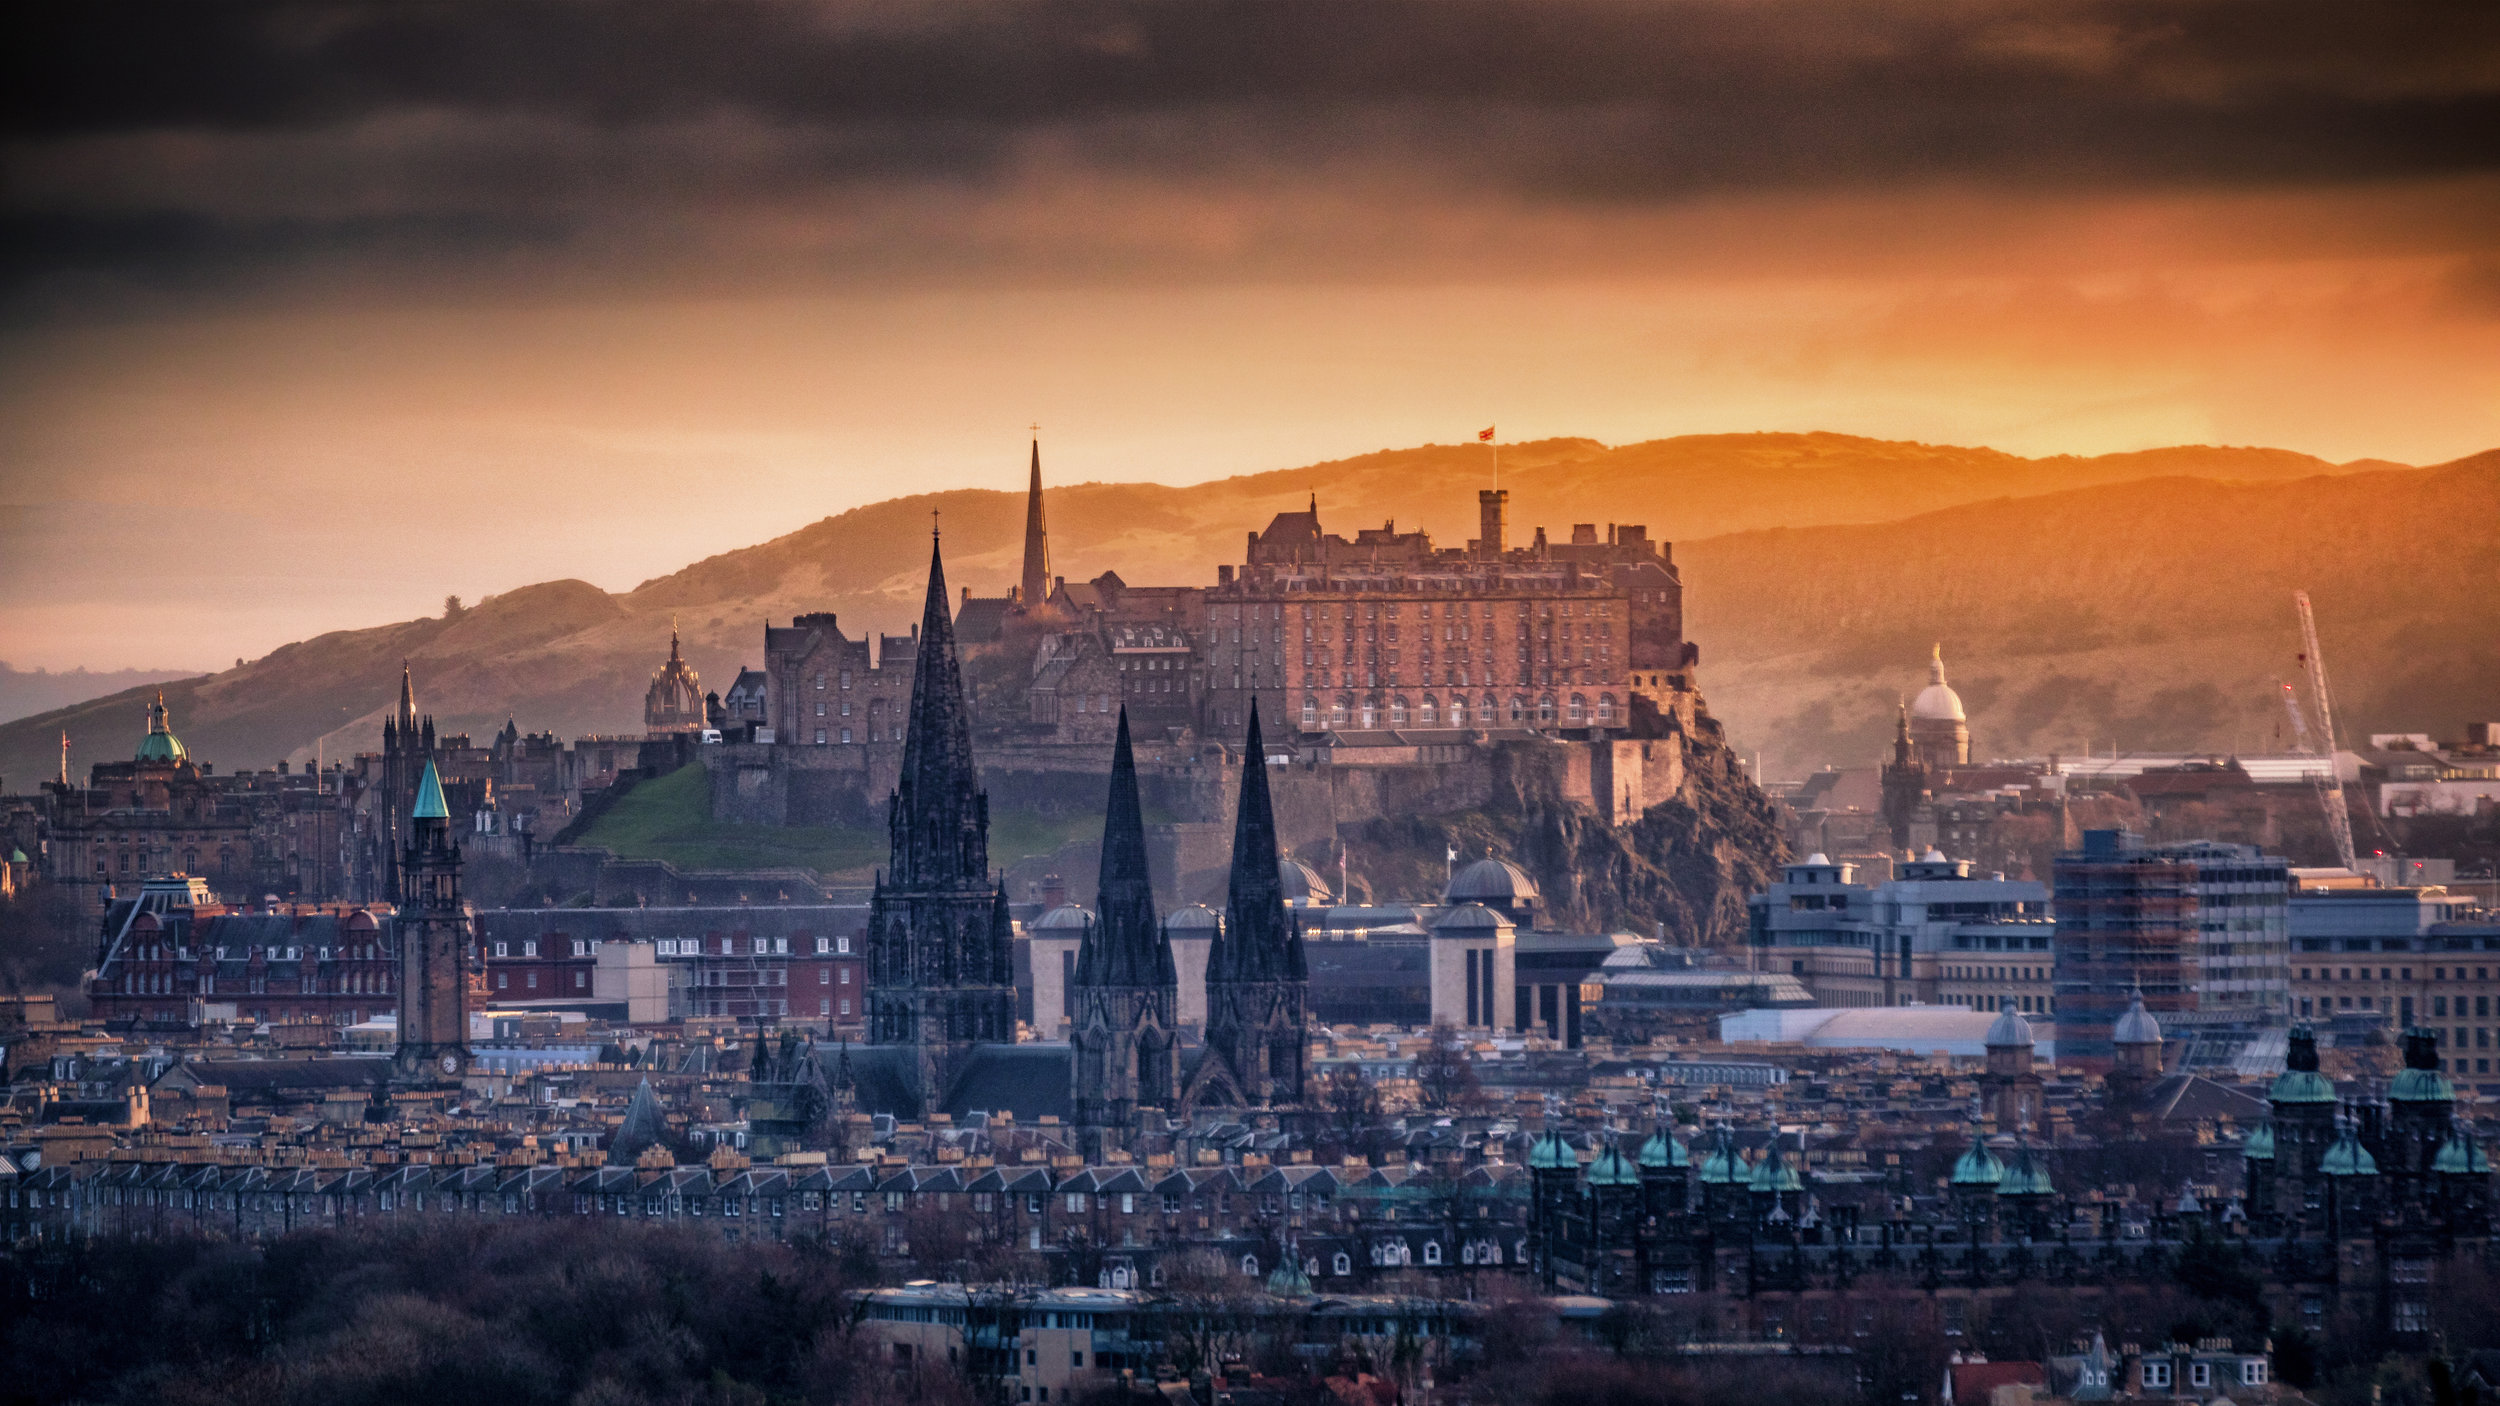 Edinburgh Castle and the City of Edinburgh